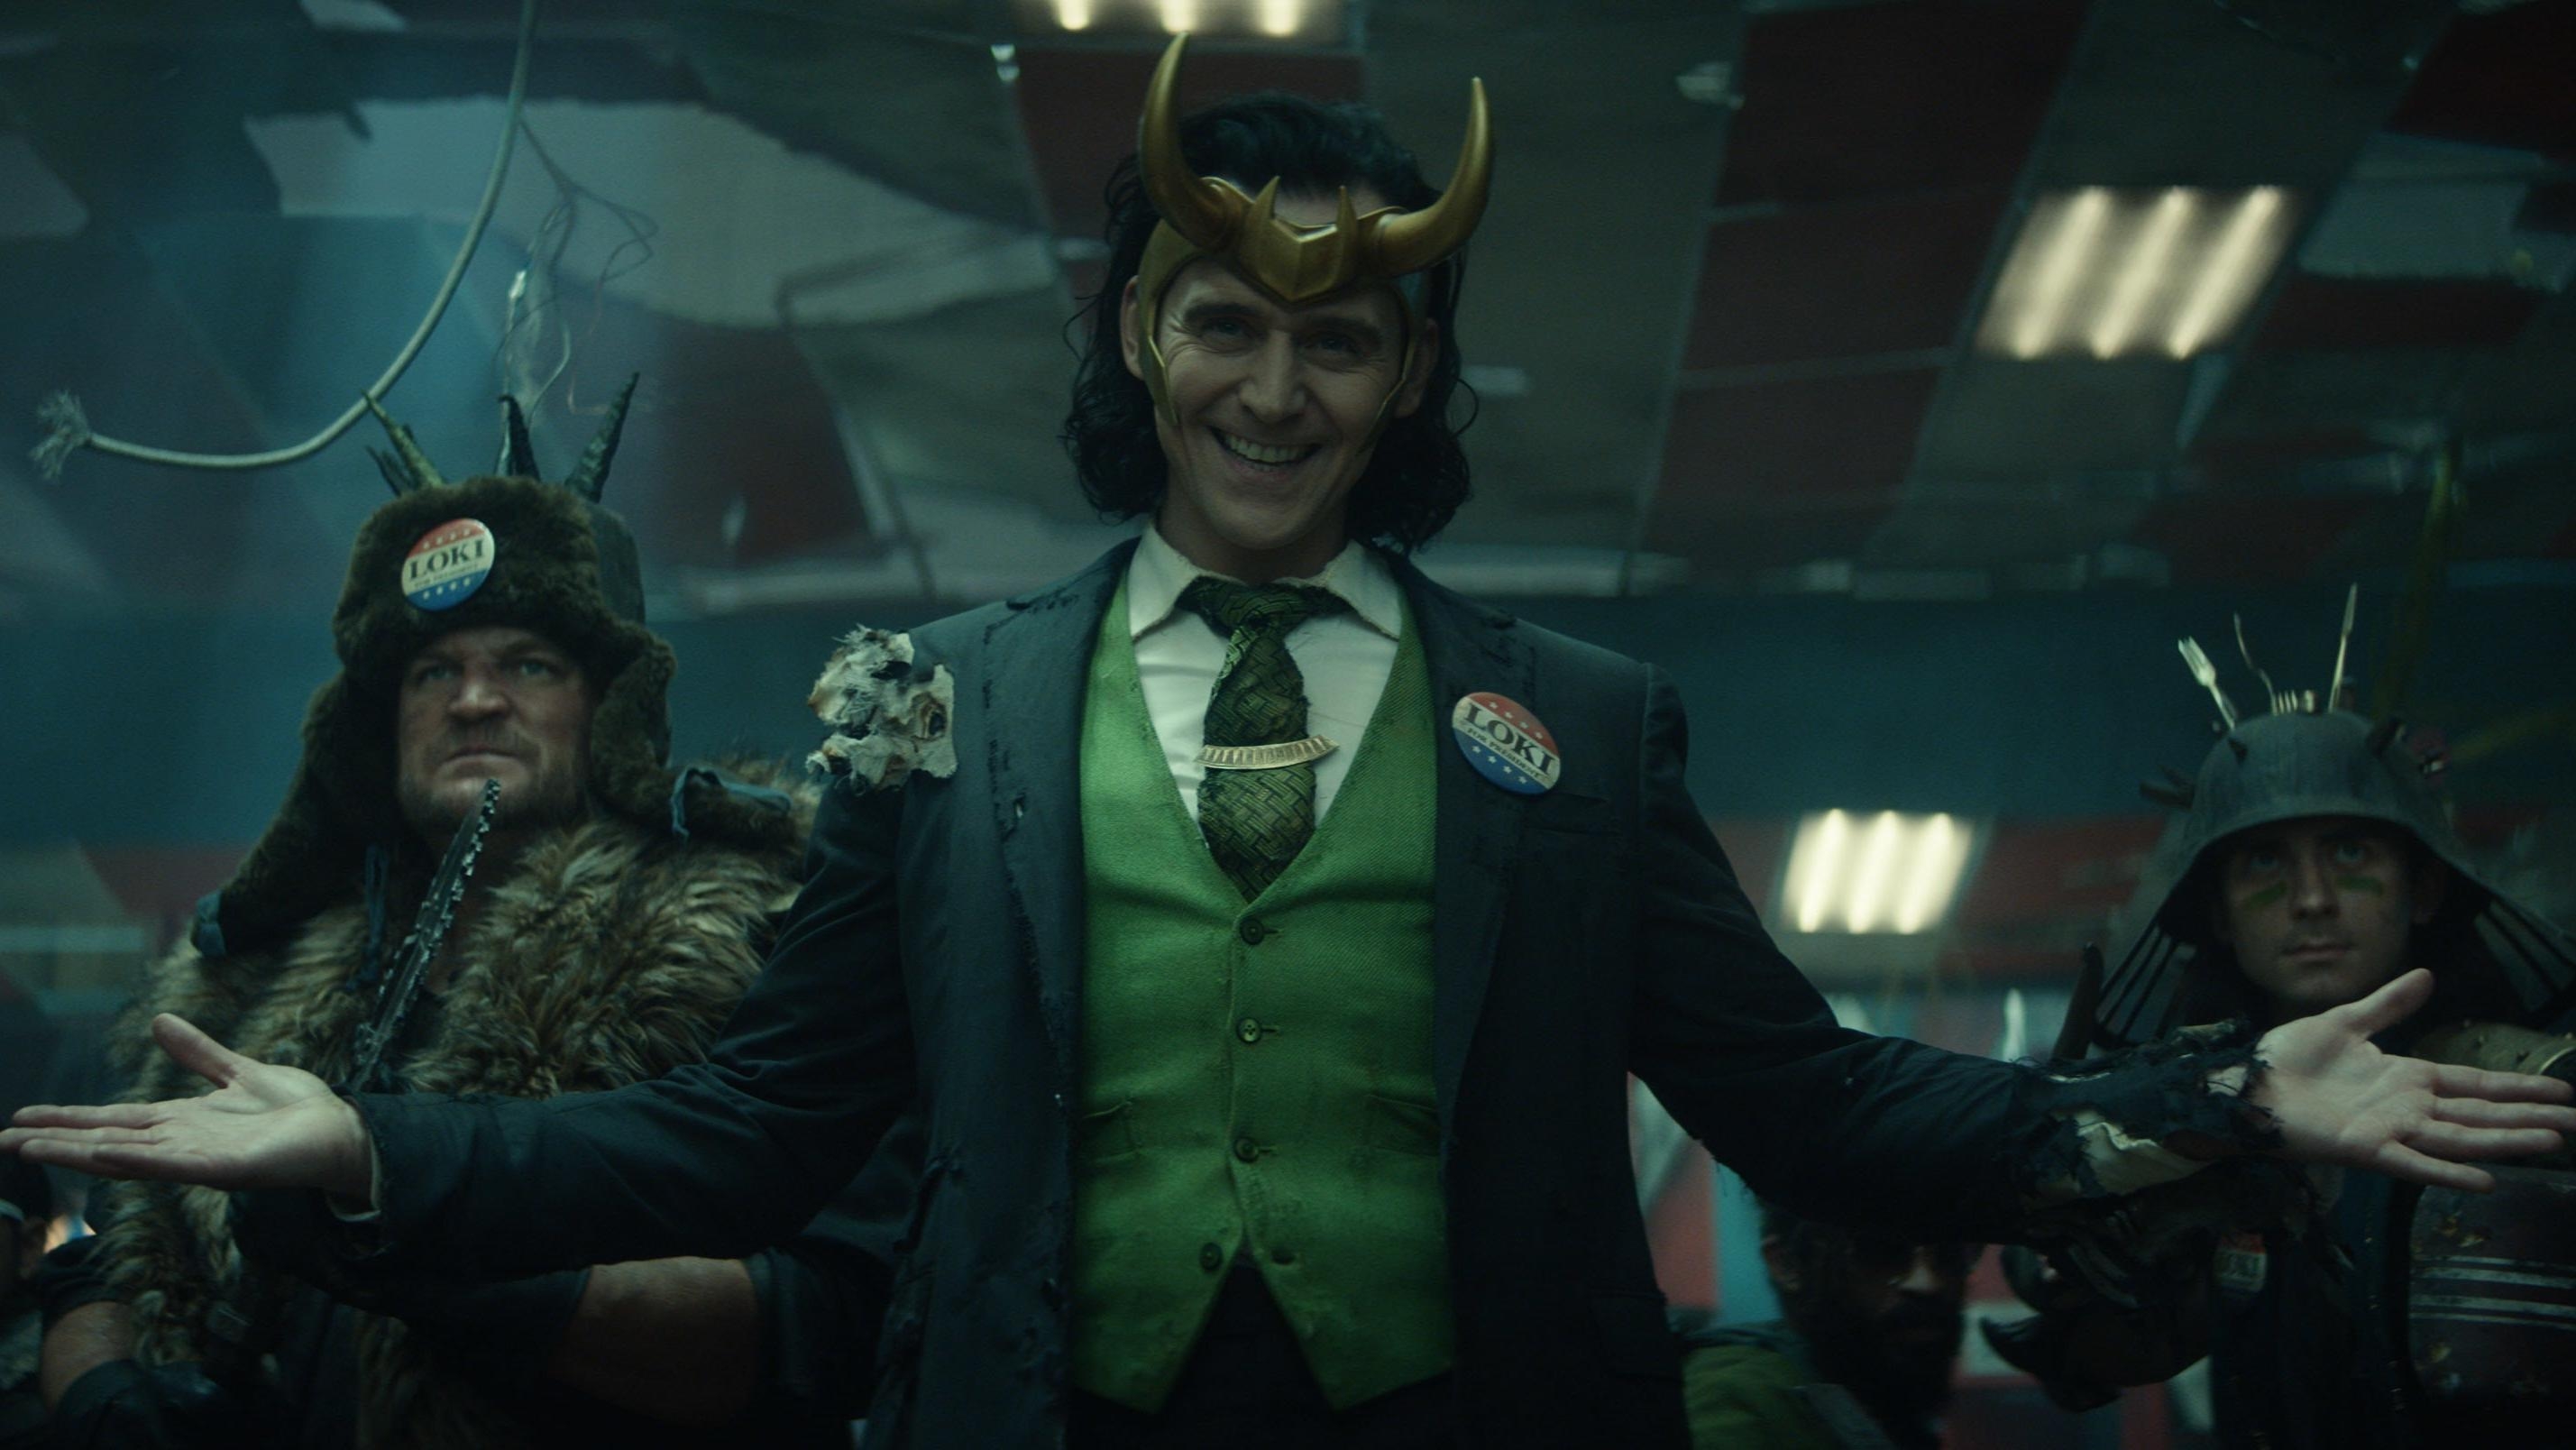 Tom Hiddleston says he’s a “temporary torchbearer” for Loki